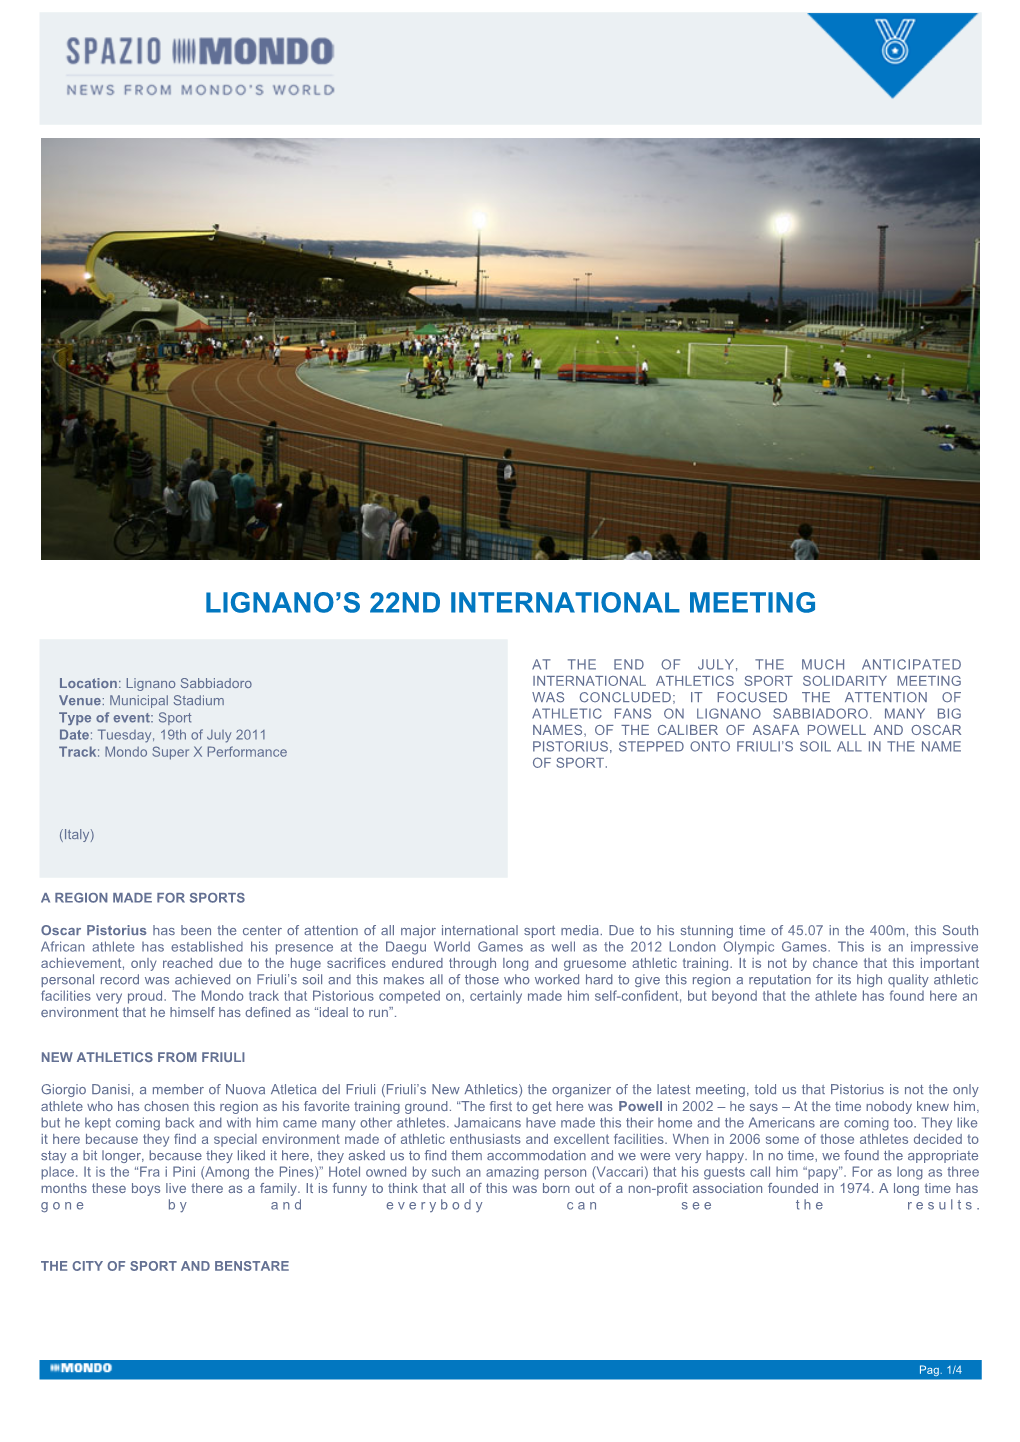 Lignano's 22Nd International Meeting